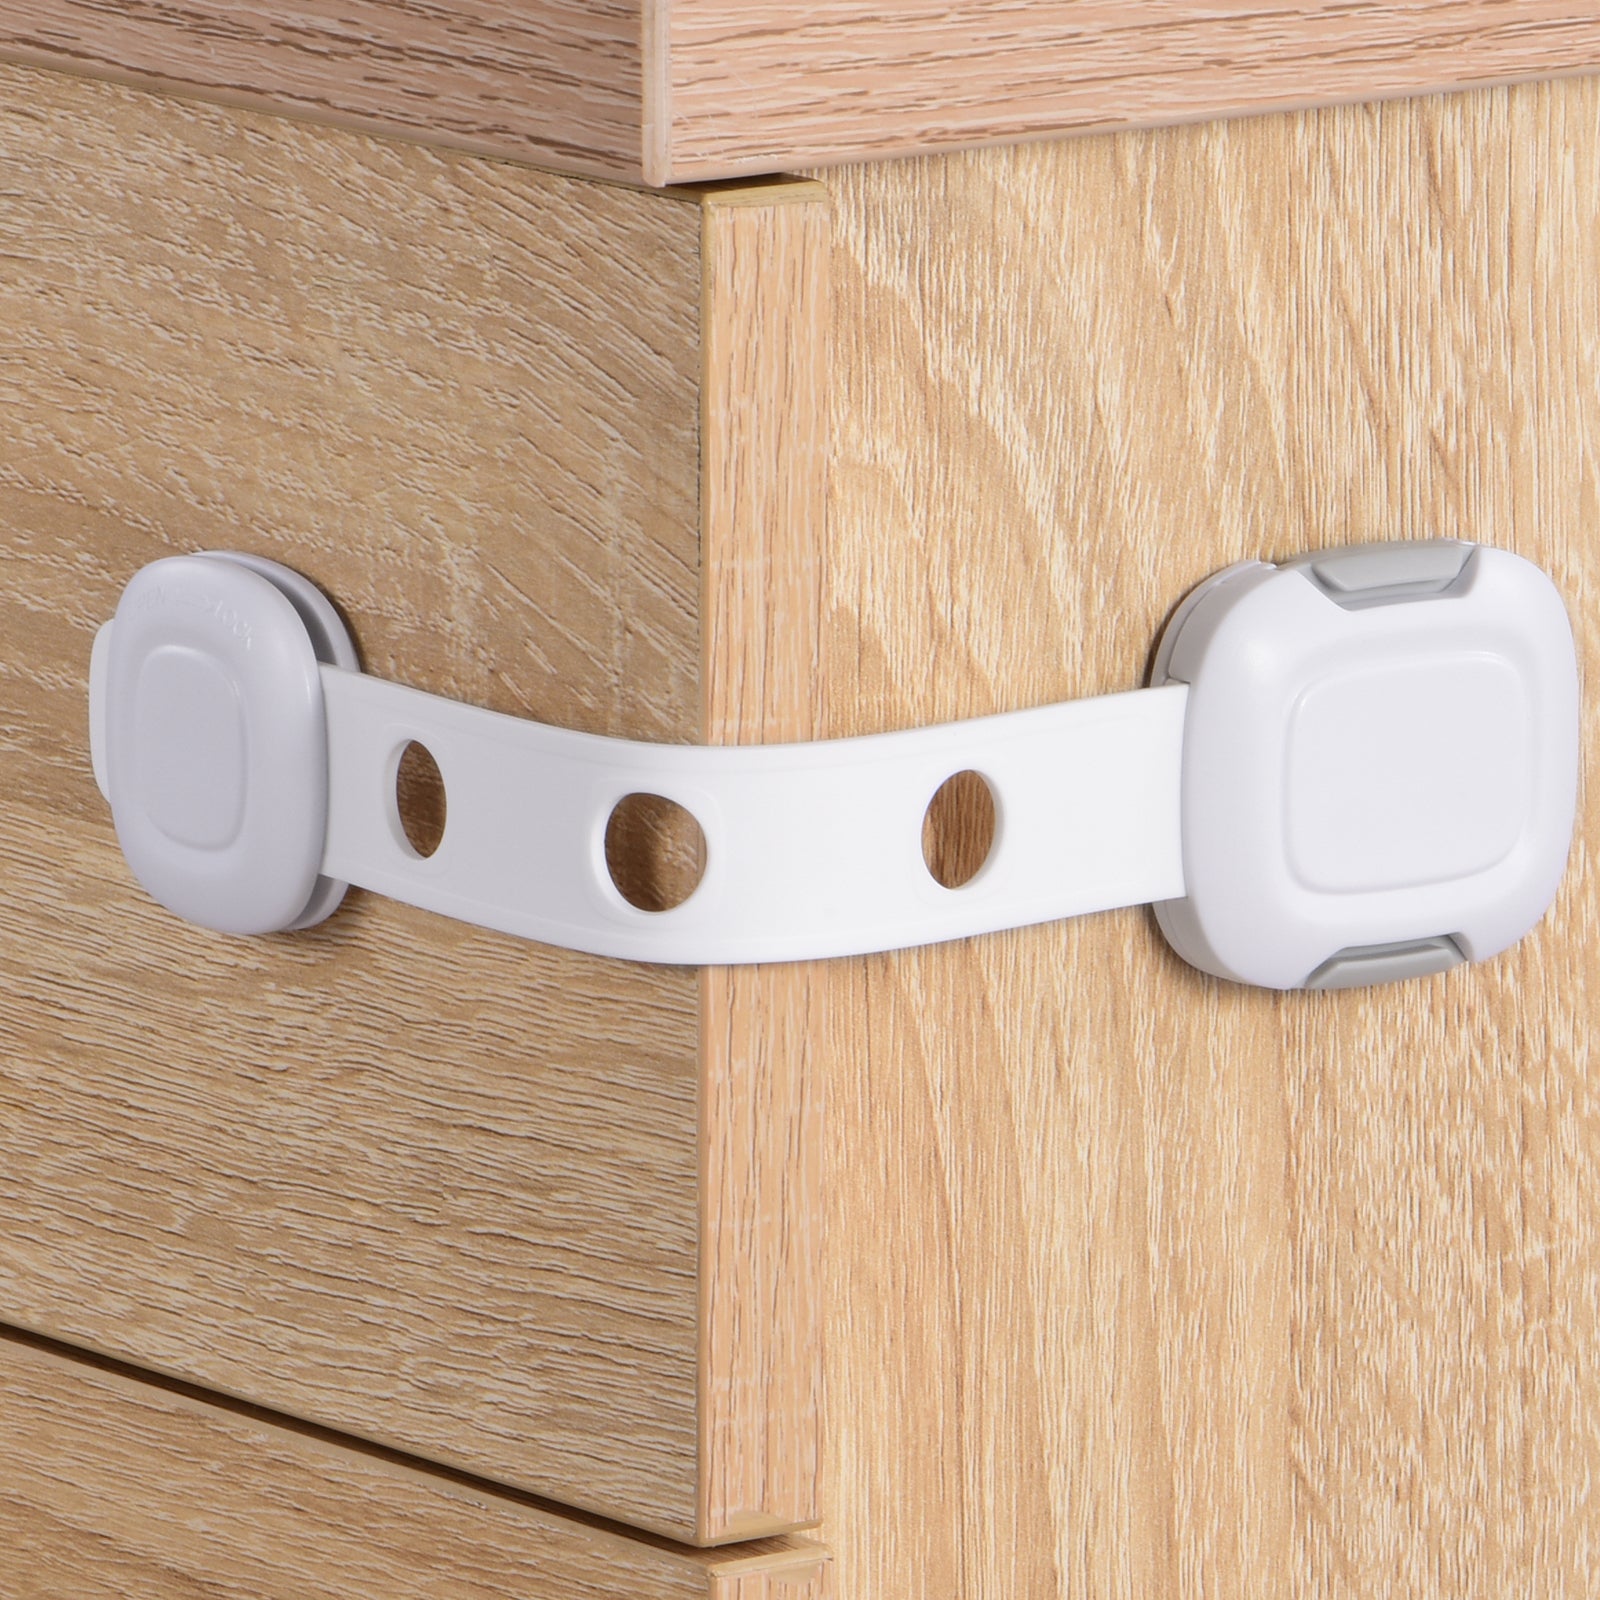 Babelio TAK 10-Pack Adjustable Baby-Proof Locks – Adhesive Cabinet